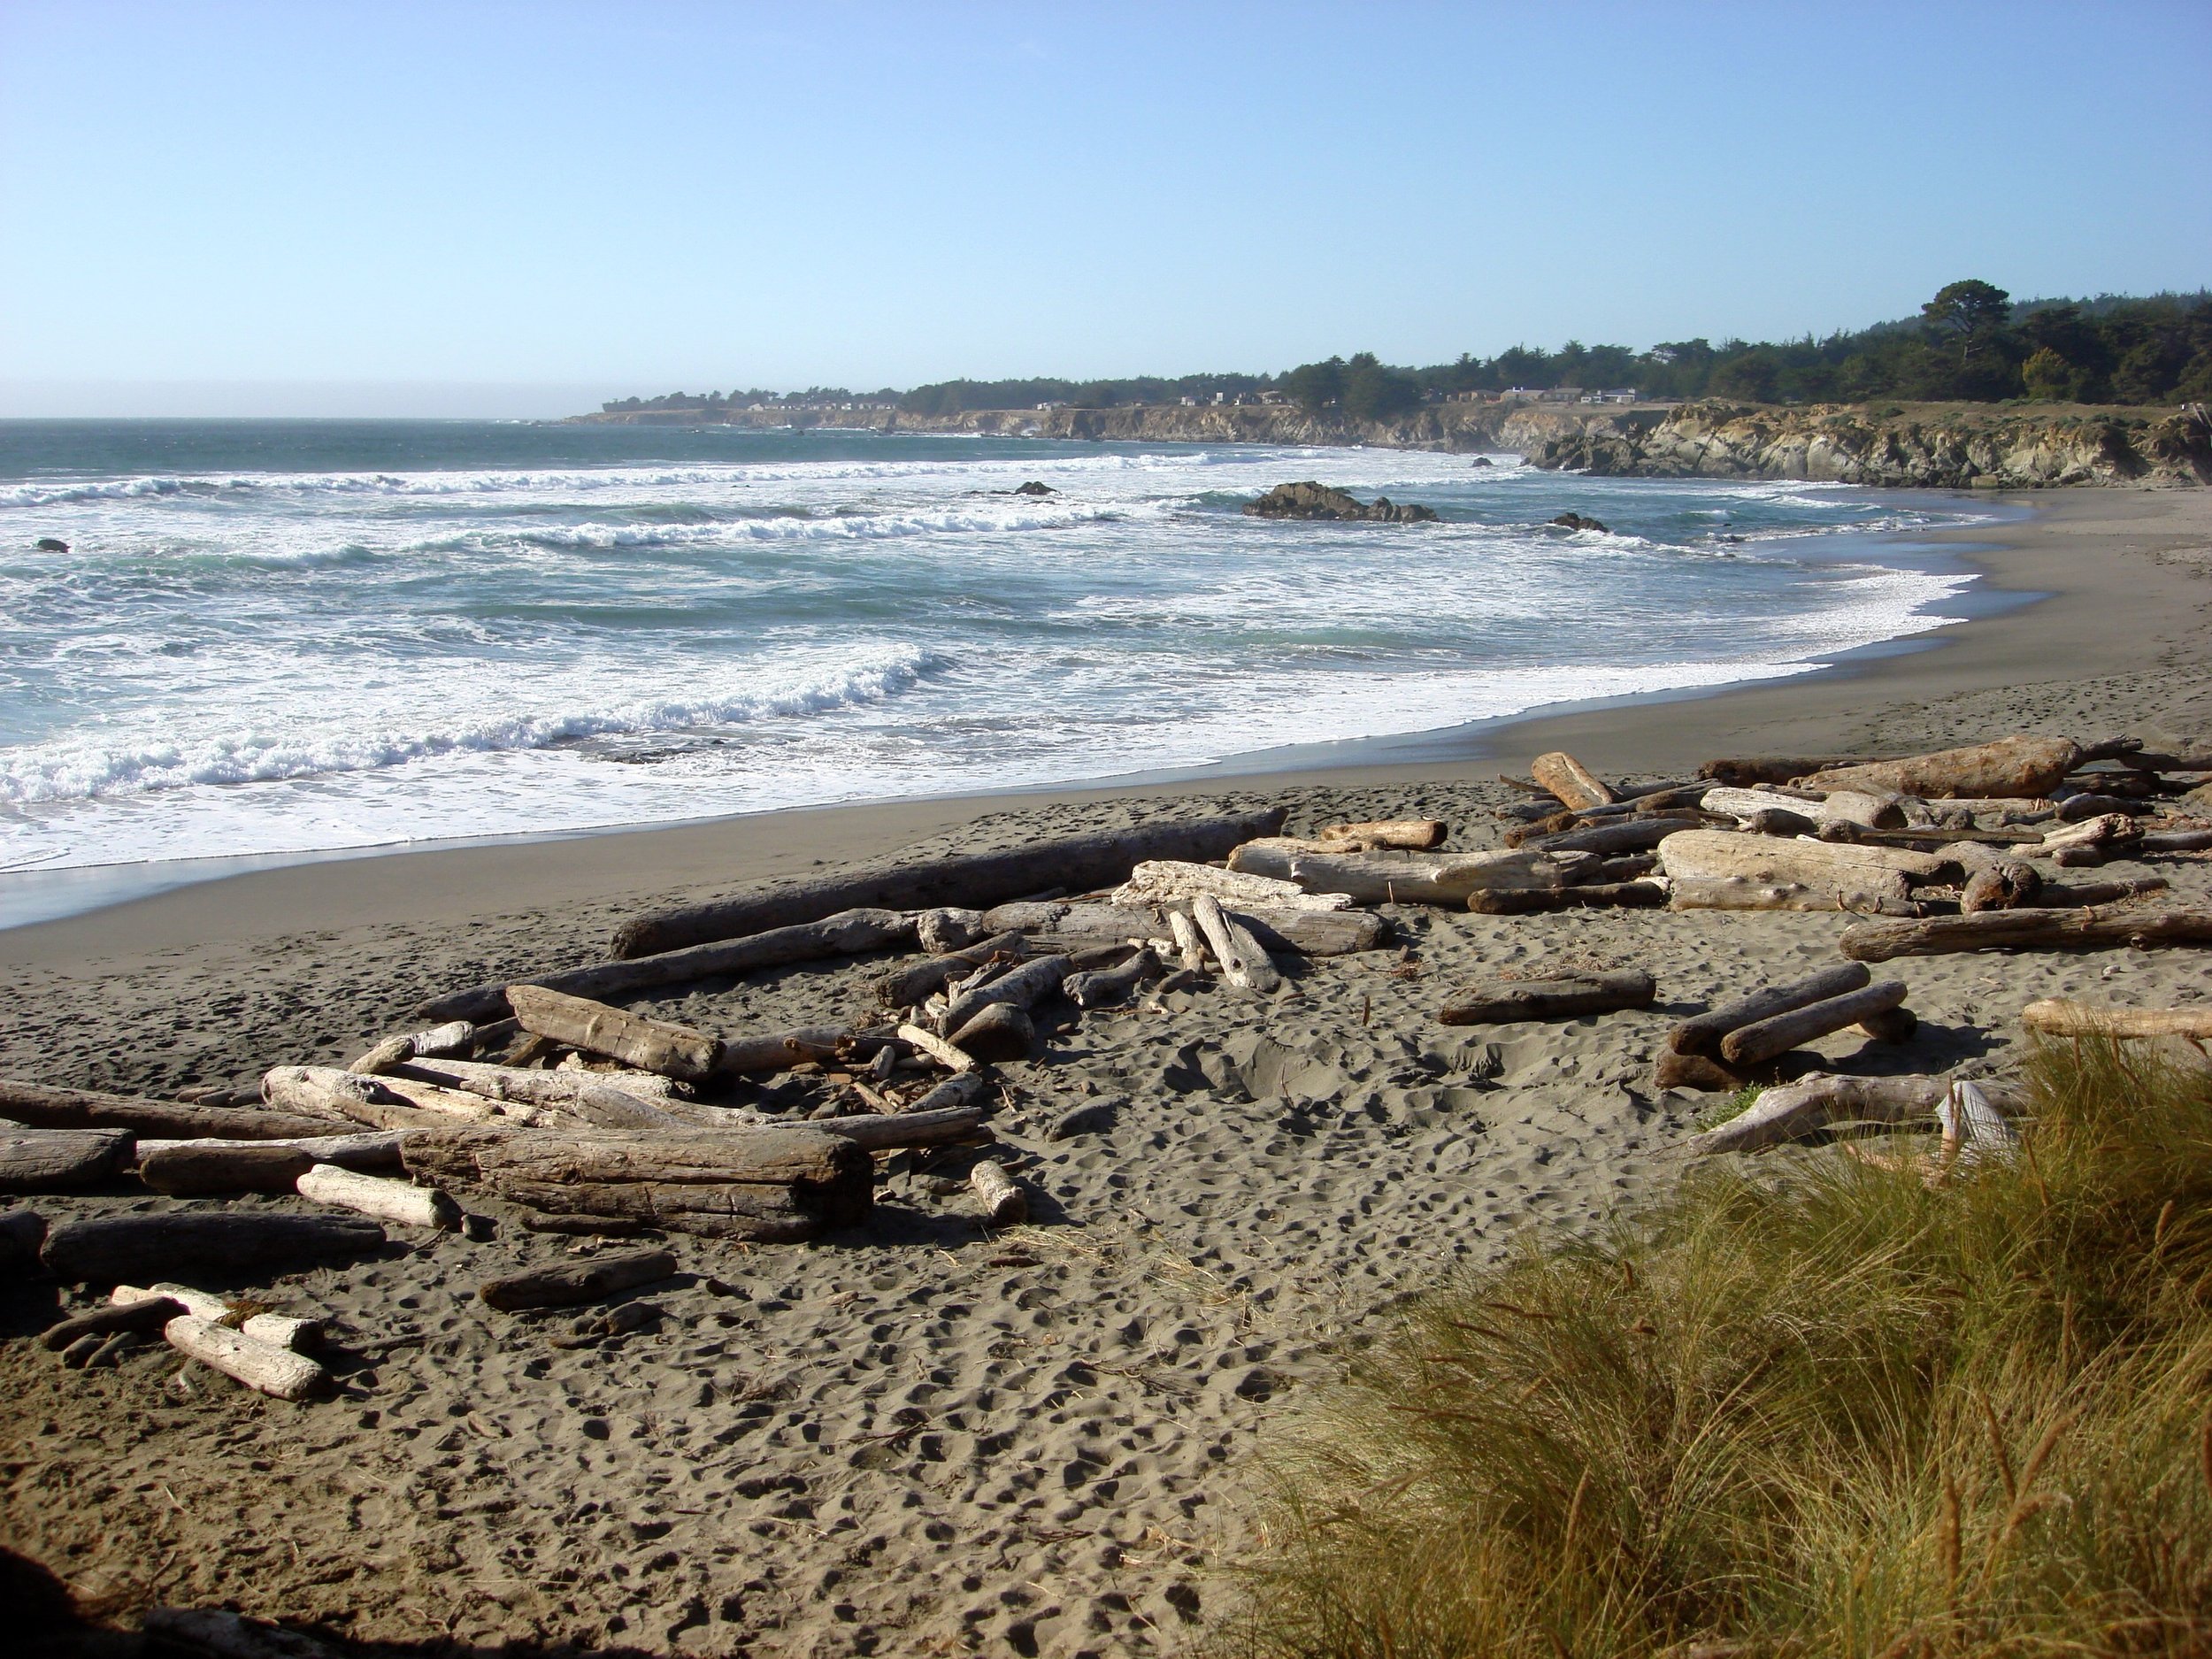 "Walk-on-Beach" with driftwood